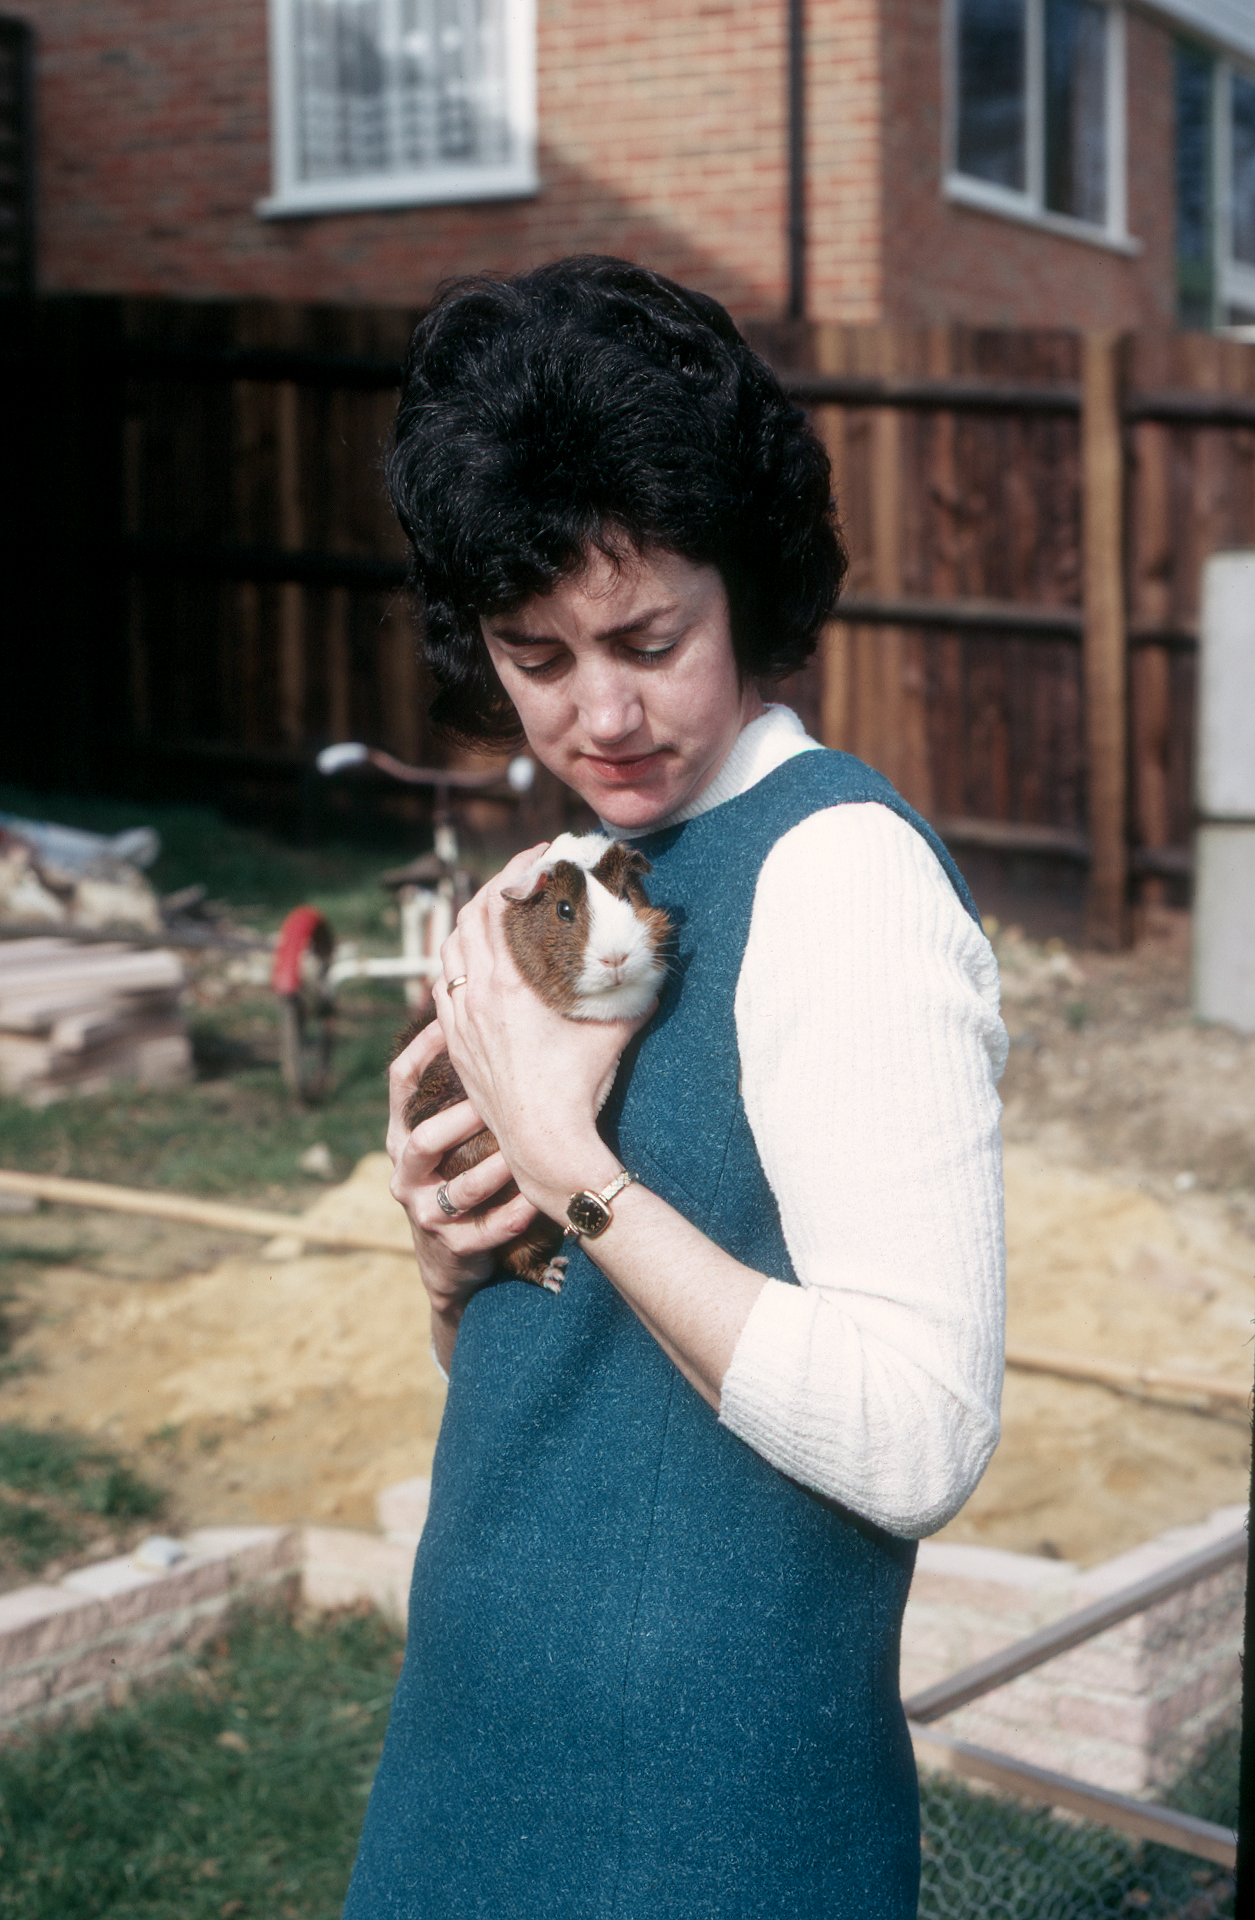 7202406k Early 1972 - Elizabeth holding Ginnie in the back garden.